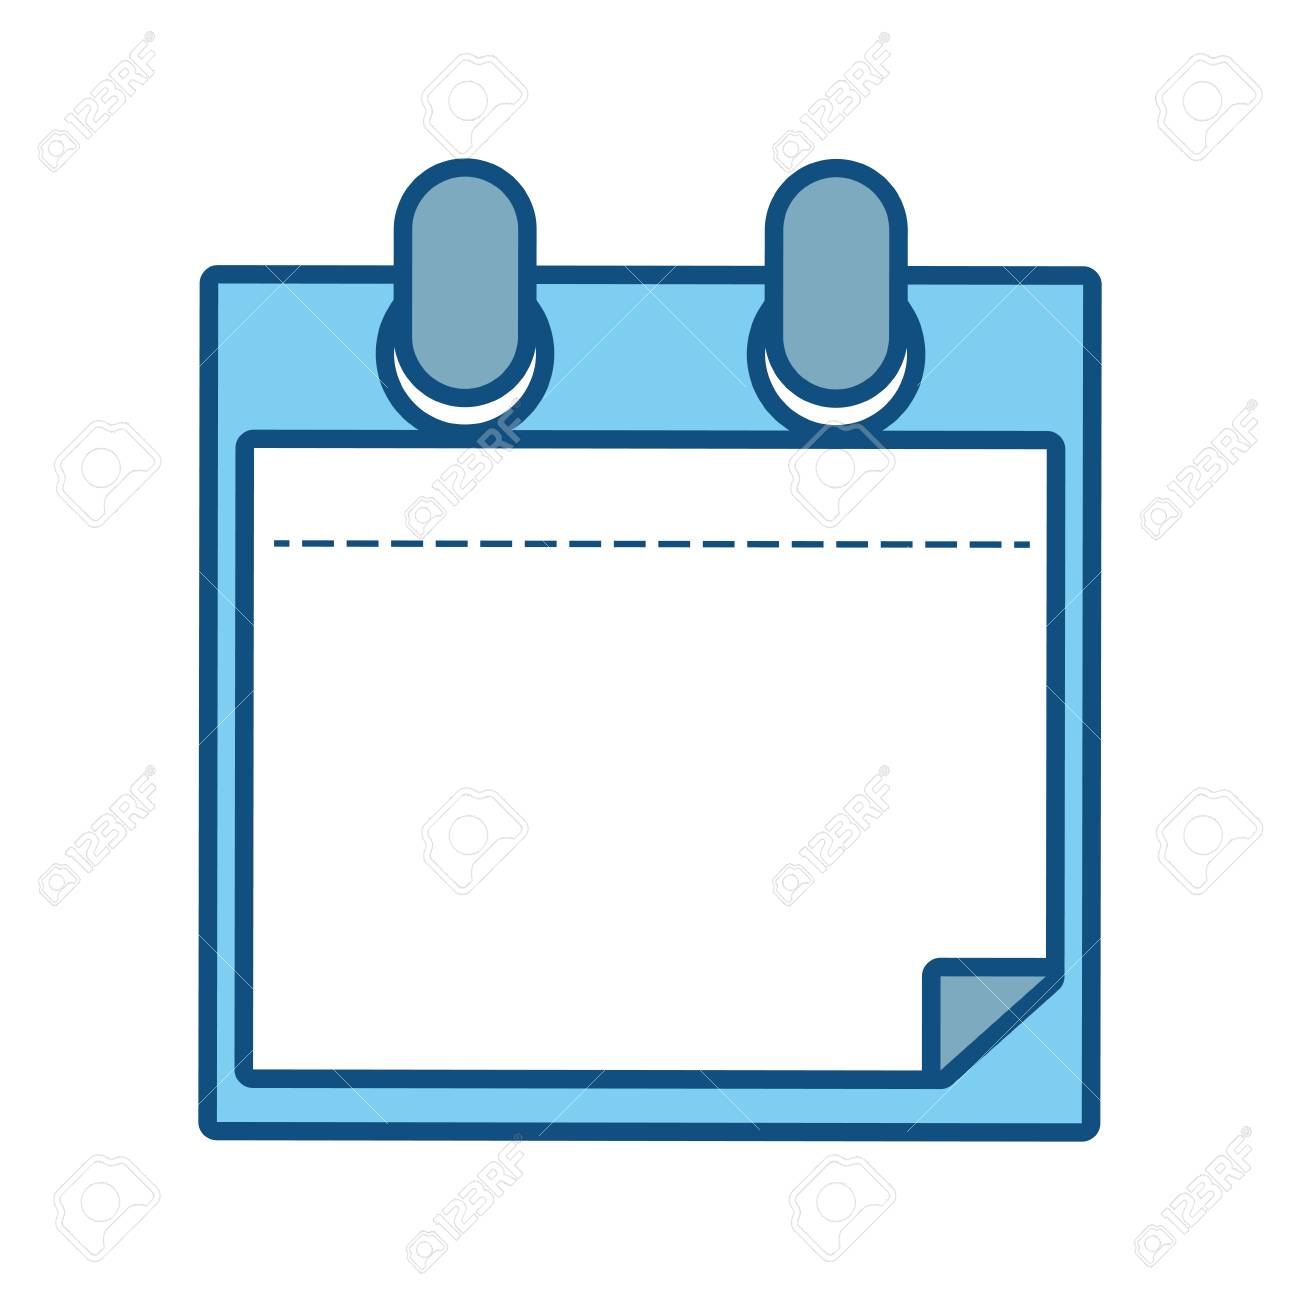 Blank Calendar Icon Over White Background Illustration pertaining to Blank Calendar Icon